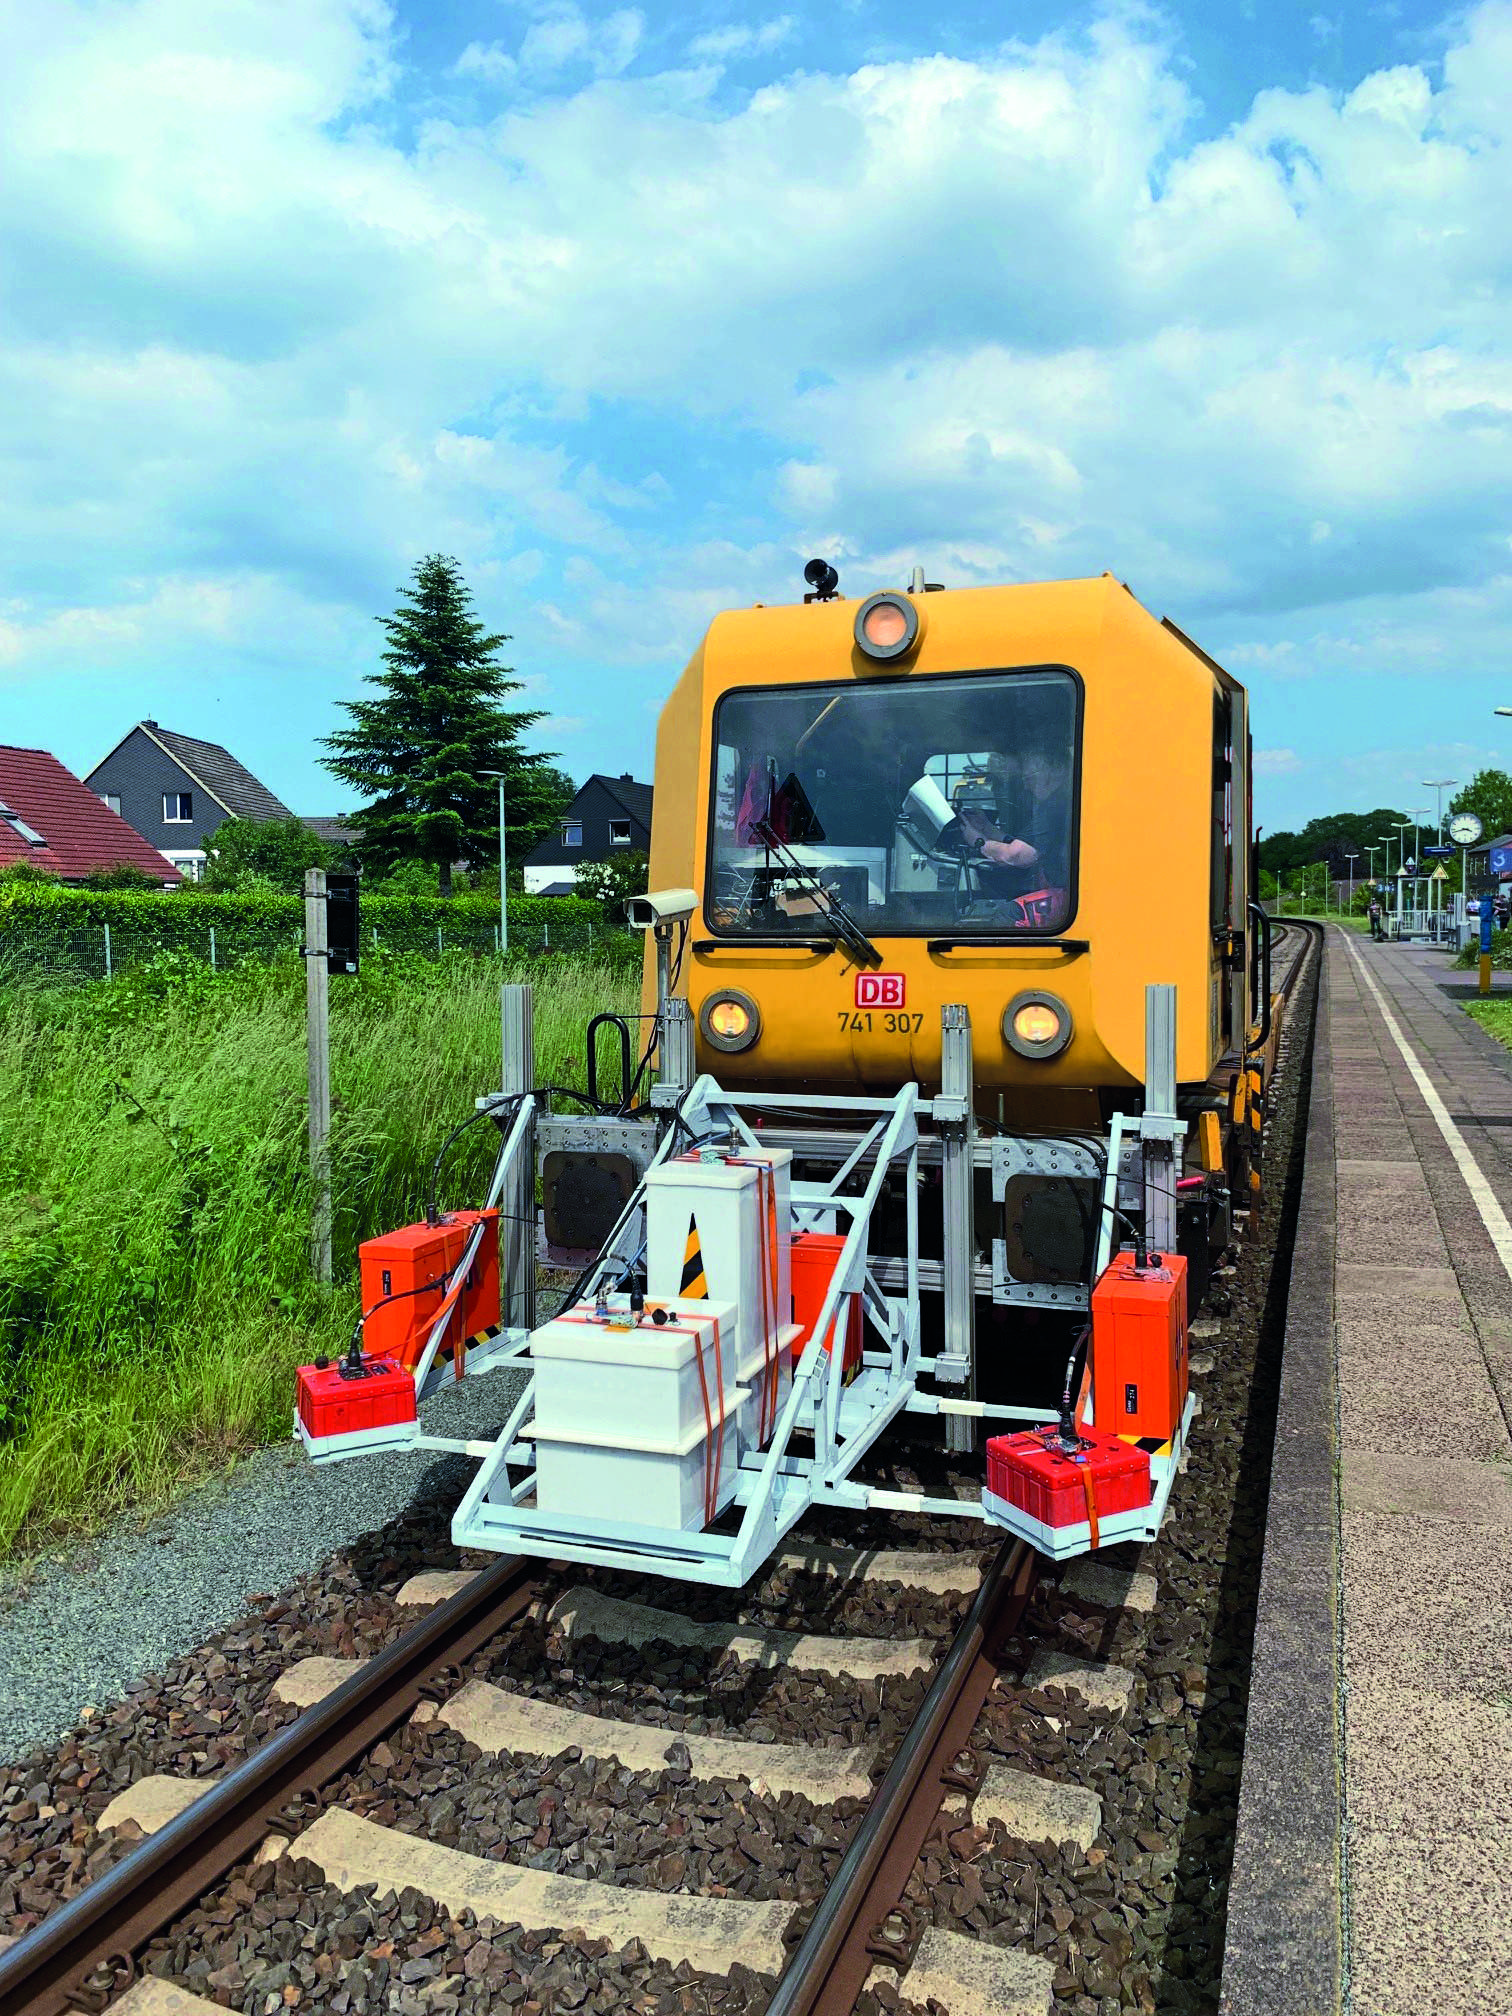 Ground-penetrating radar_measuring vehicle on rail